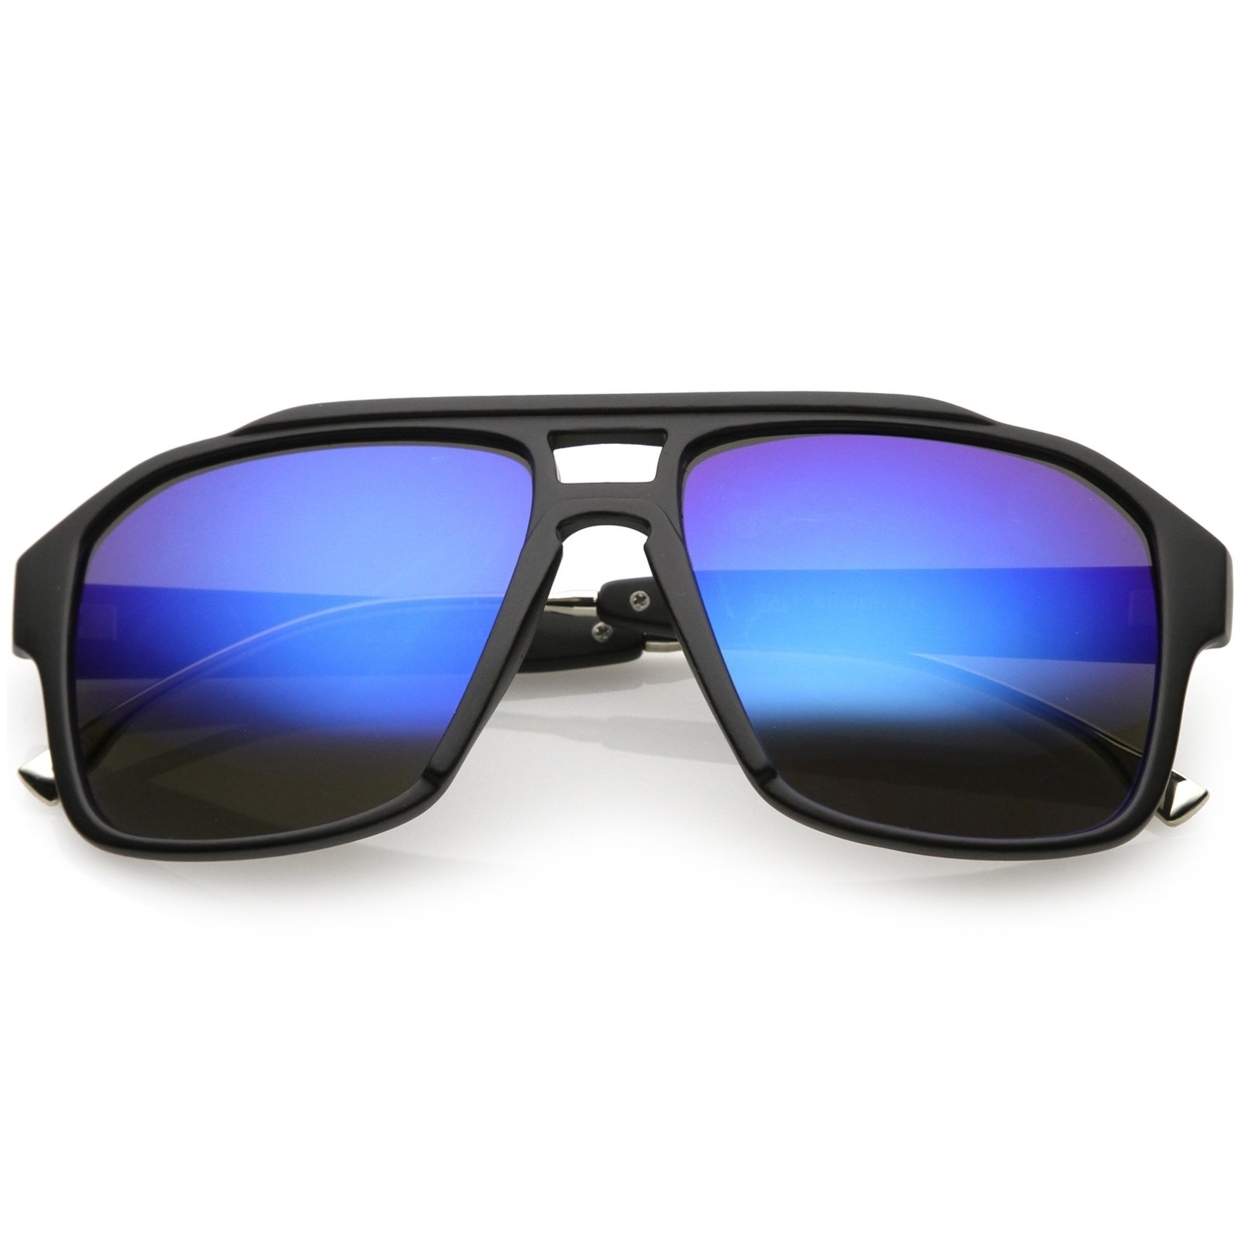 Sporty Aviator Sunglasses Flat Top Keyhole Nose Bridge Square Mirrored Lens 55mm - Matte Black / Blue Mirror